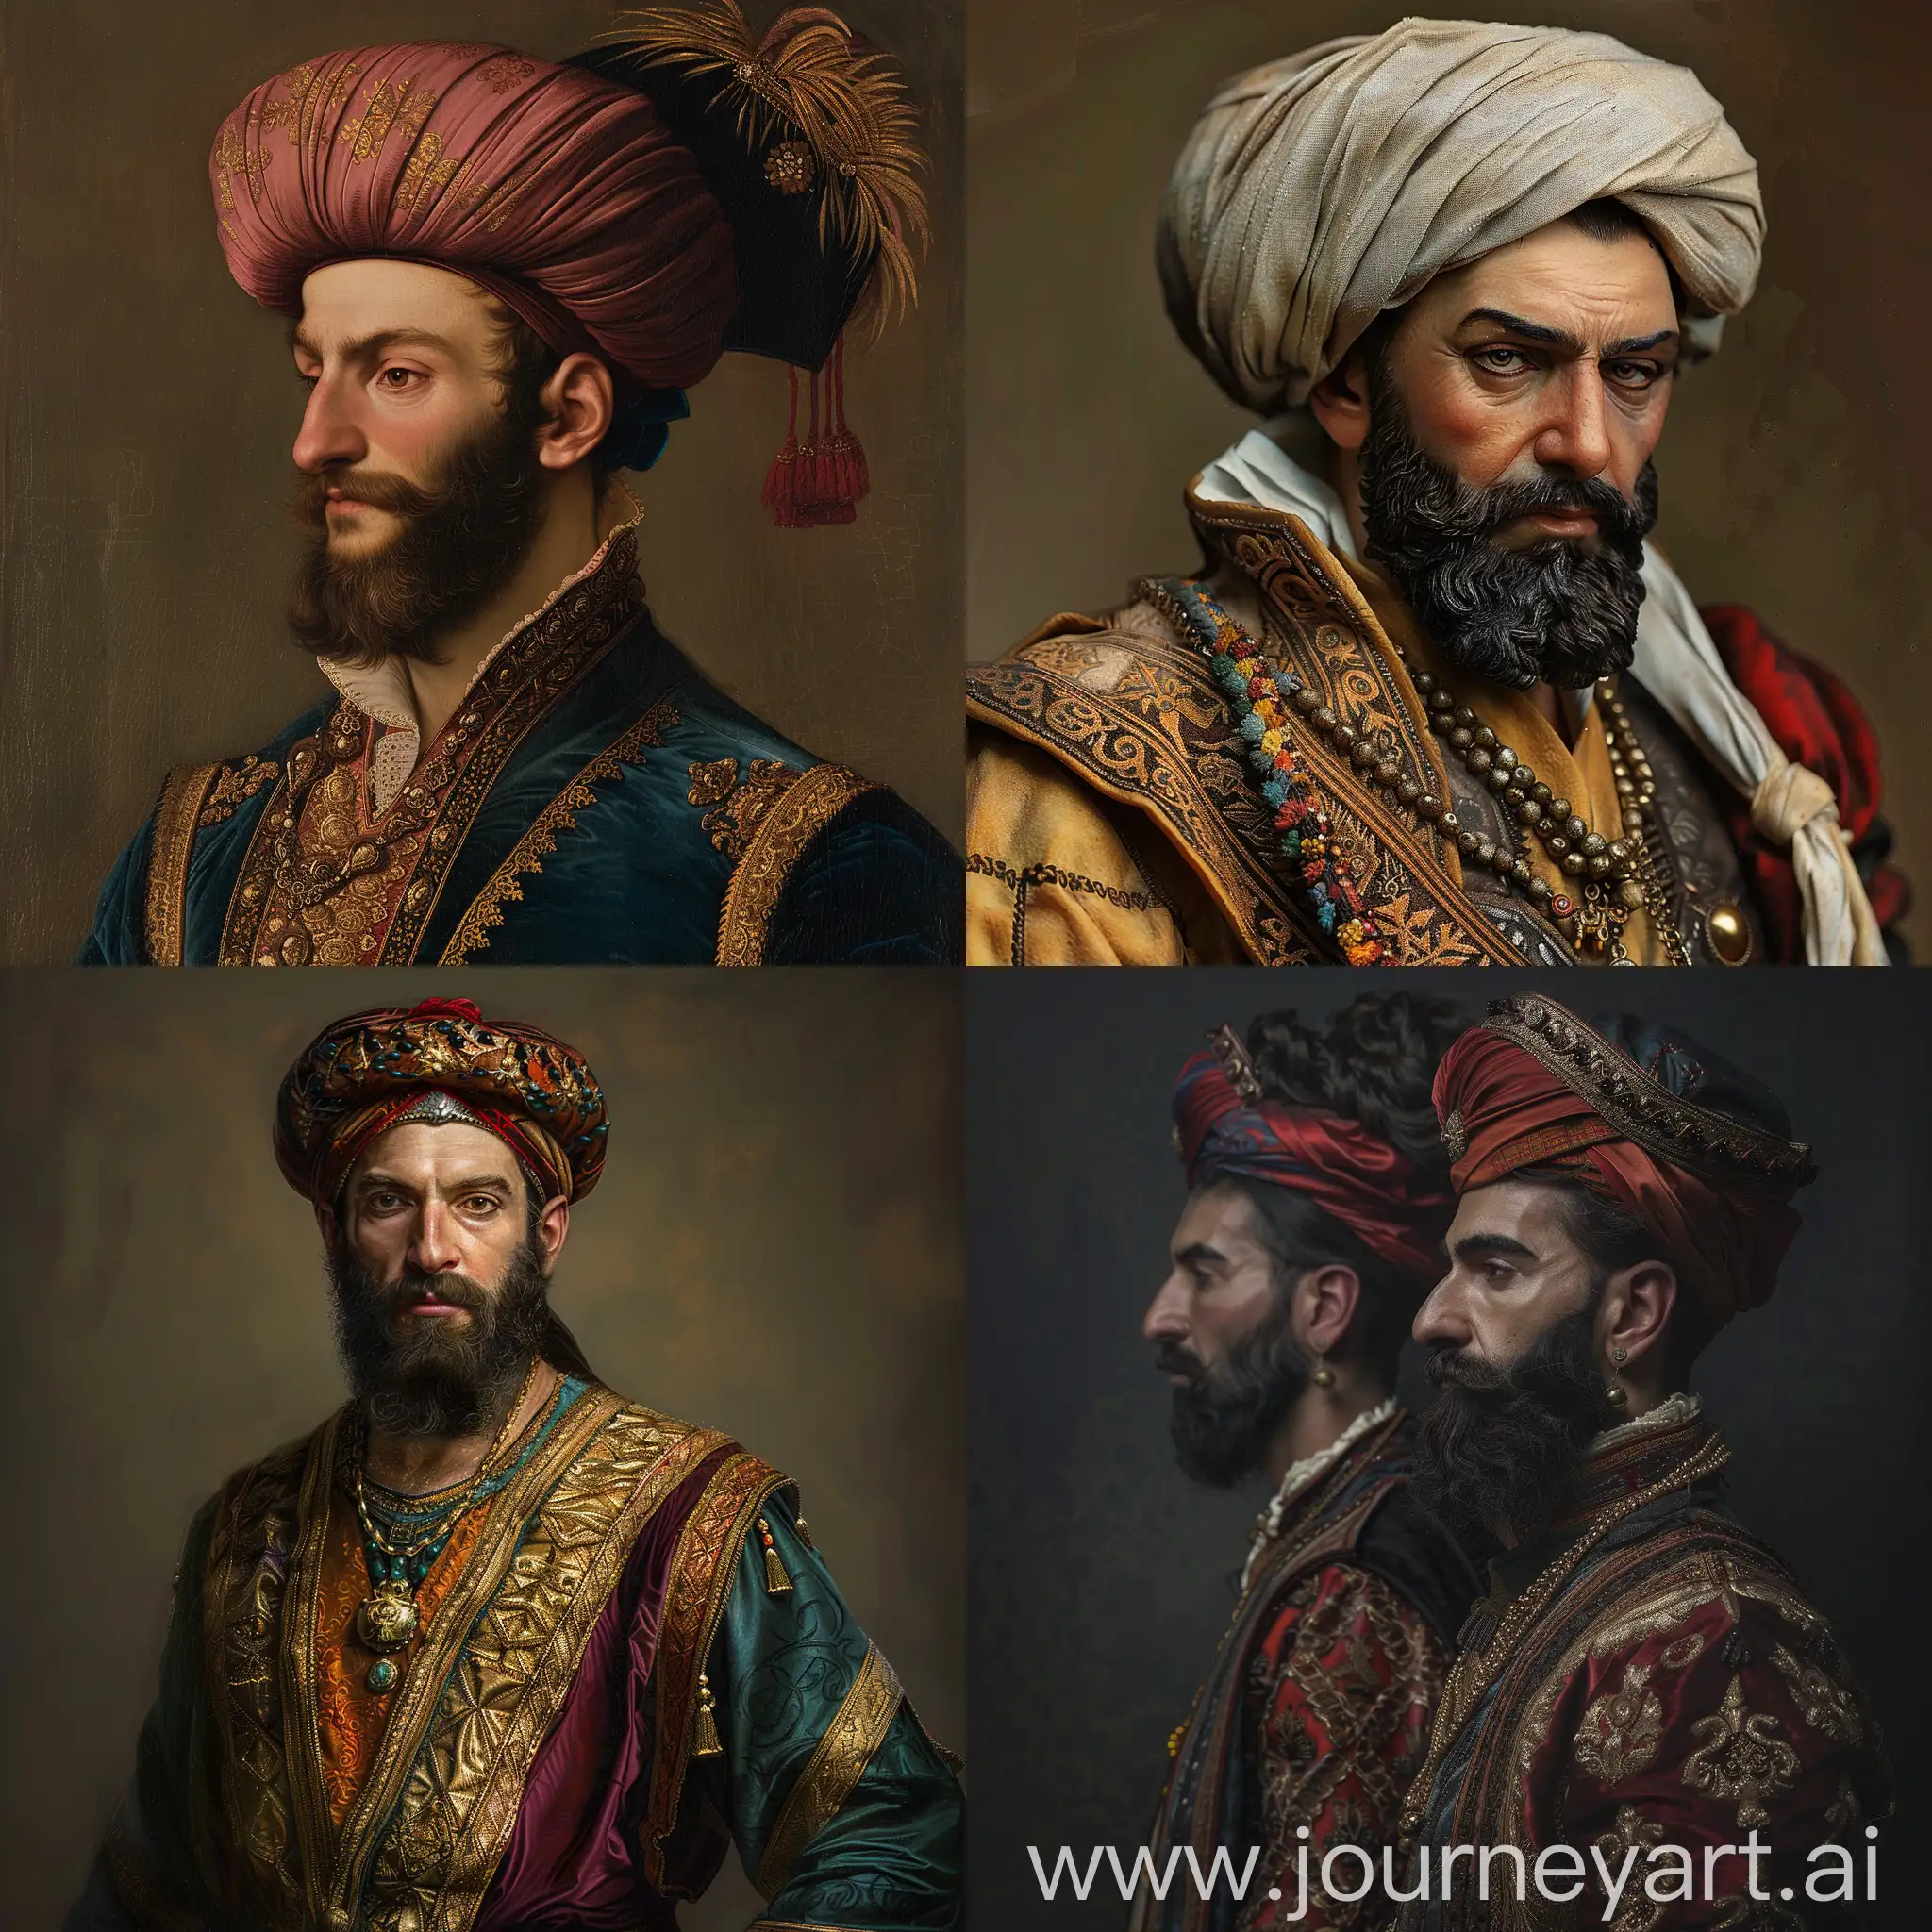 Anatolian-Greek-Nobleman-in-Renaissance-Style-Portrait